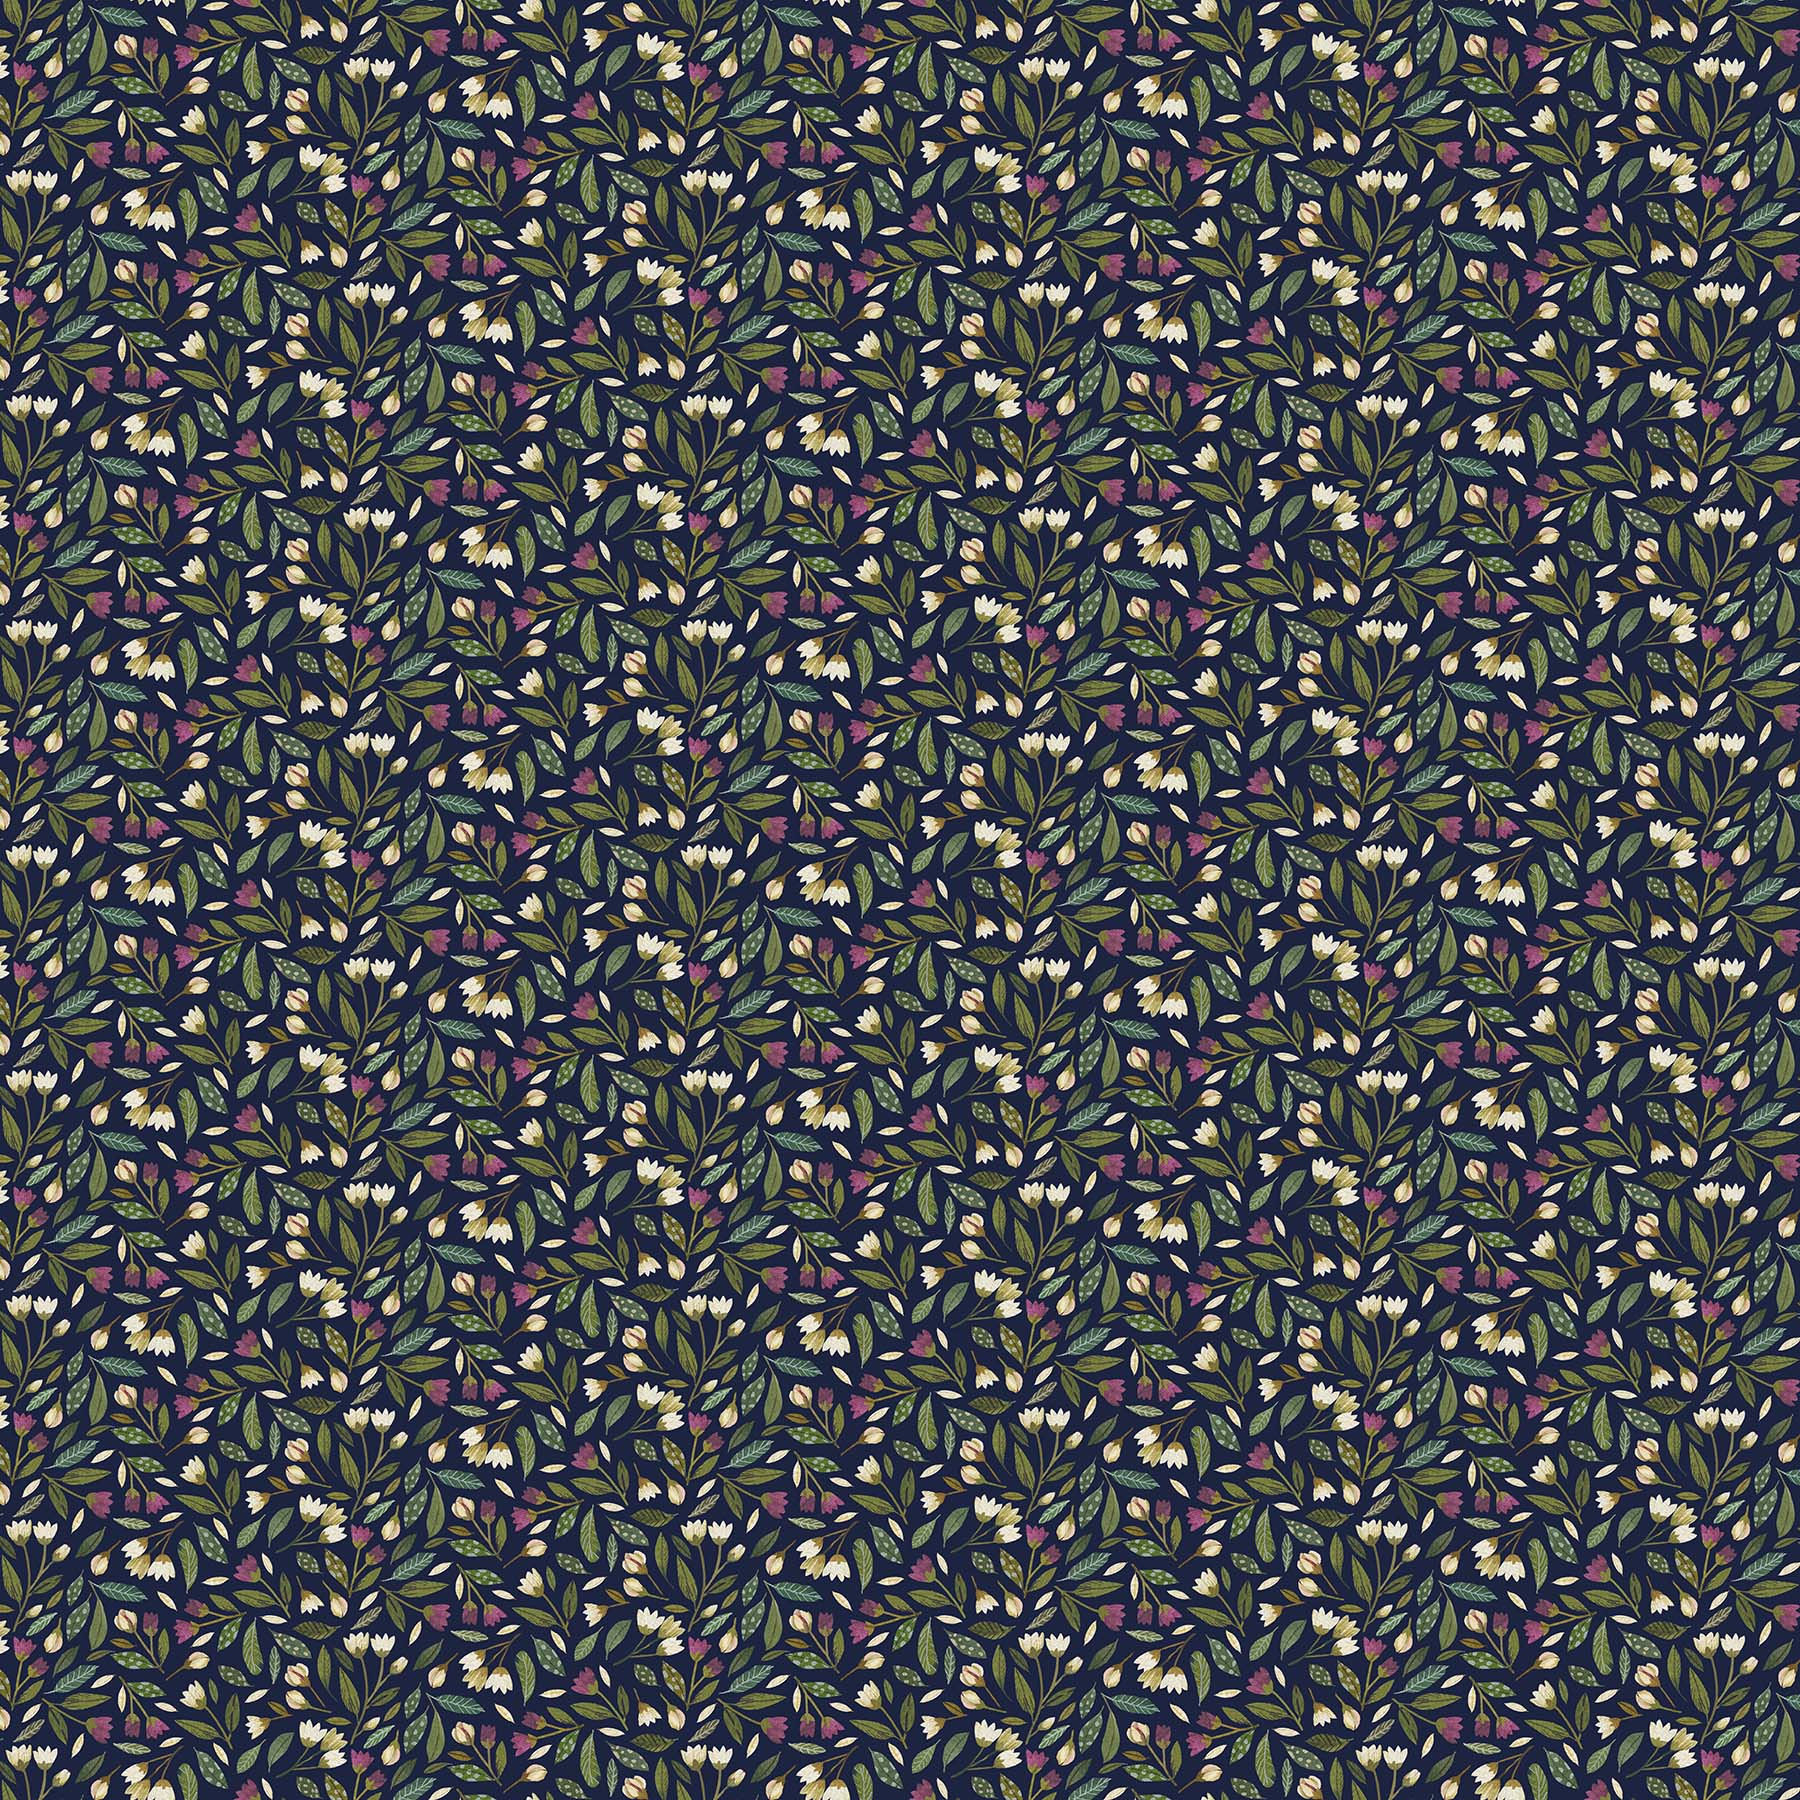 Fabric, Avalon, Navy Mini Floral 24850-49